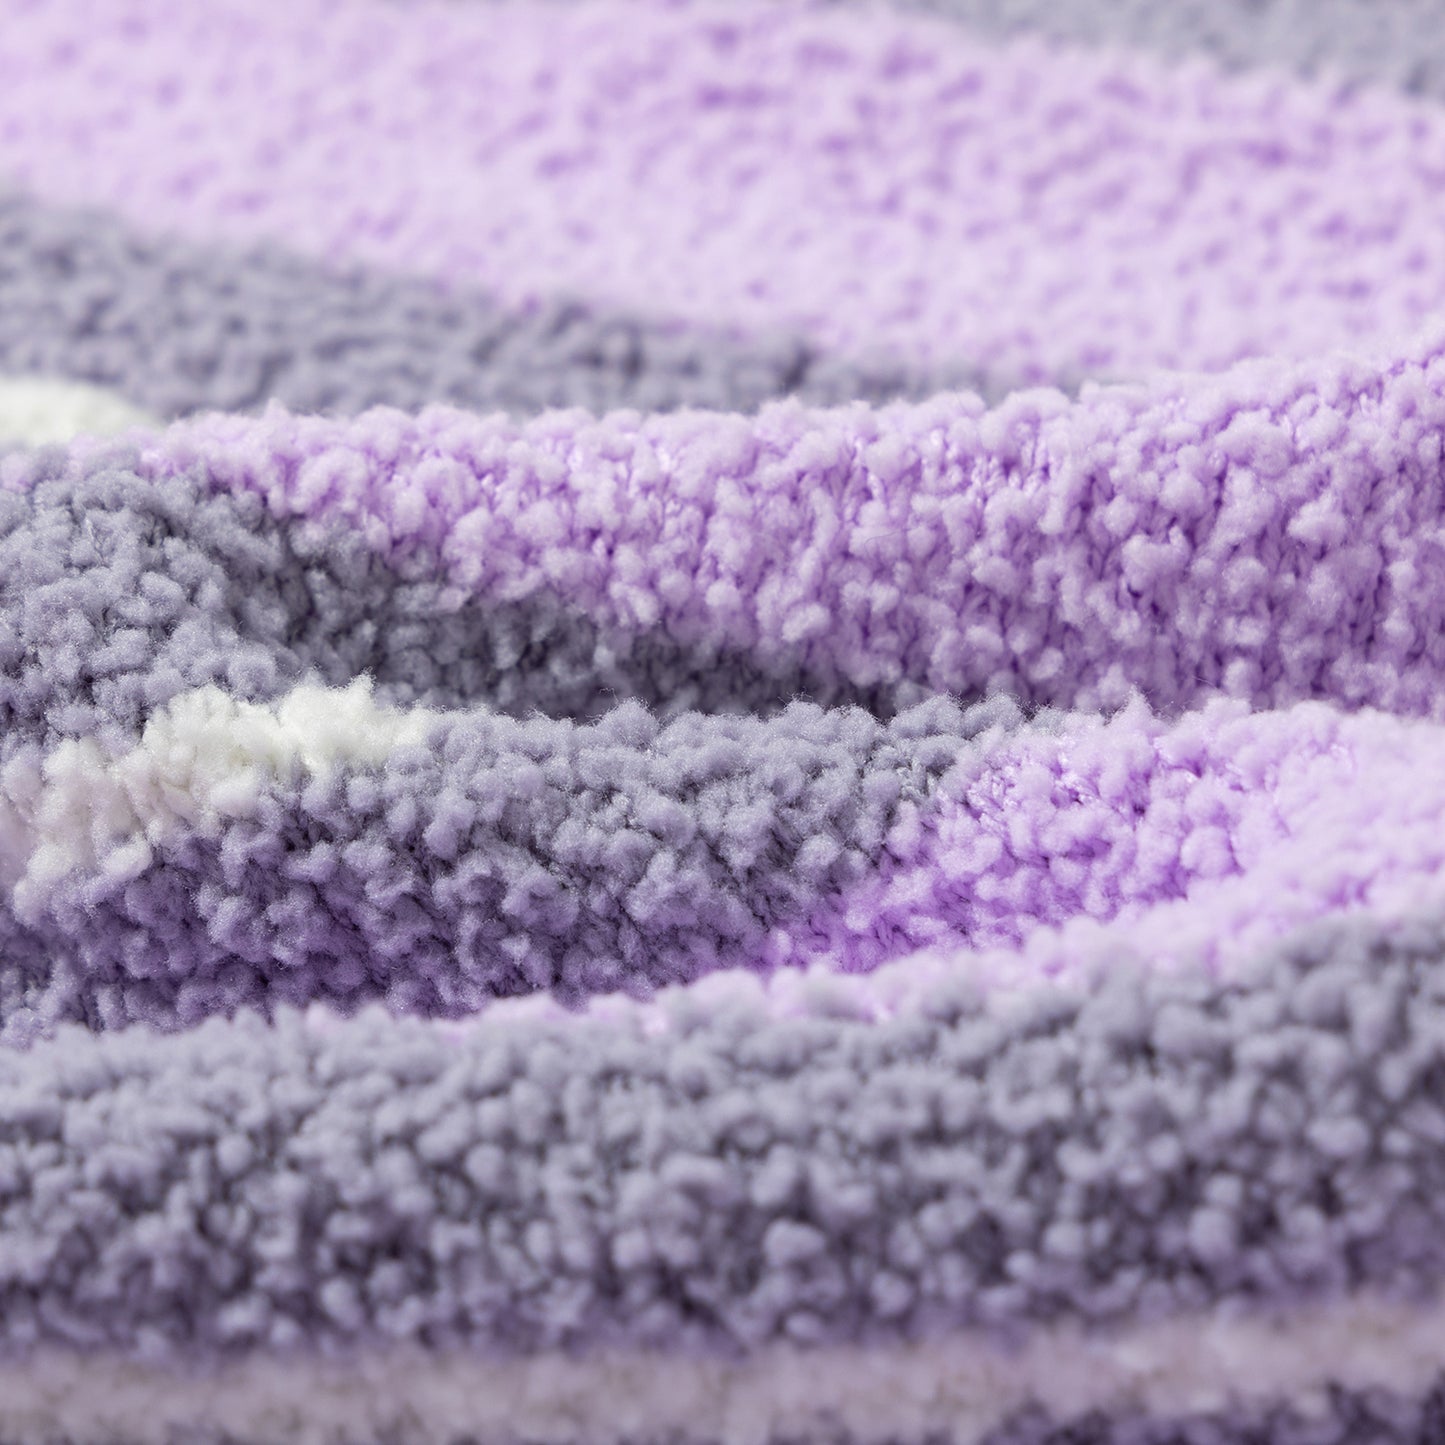 Sweater Soft Strips, Purple